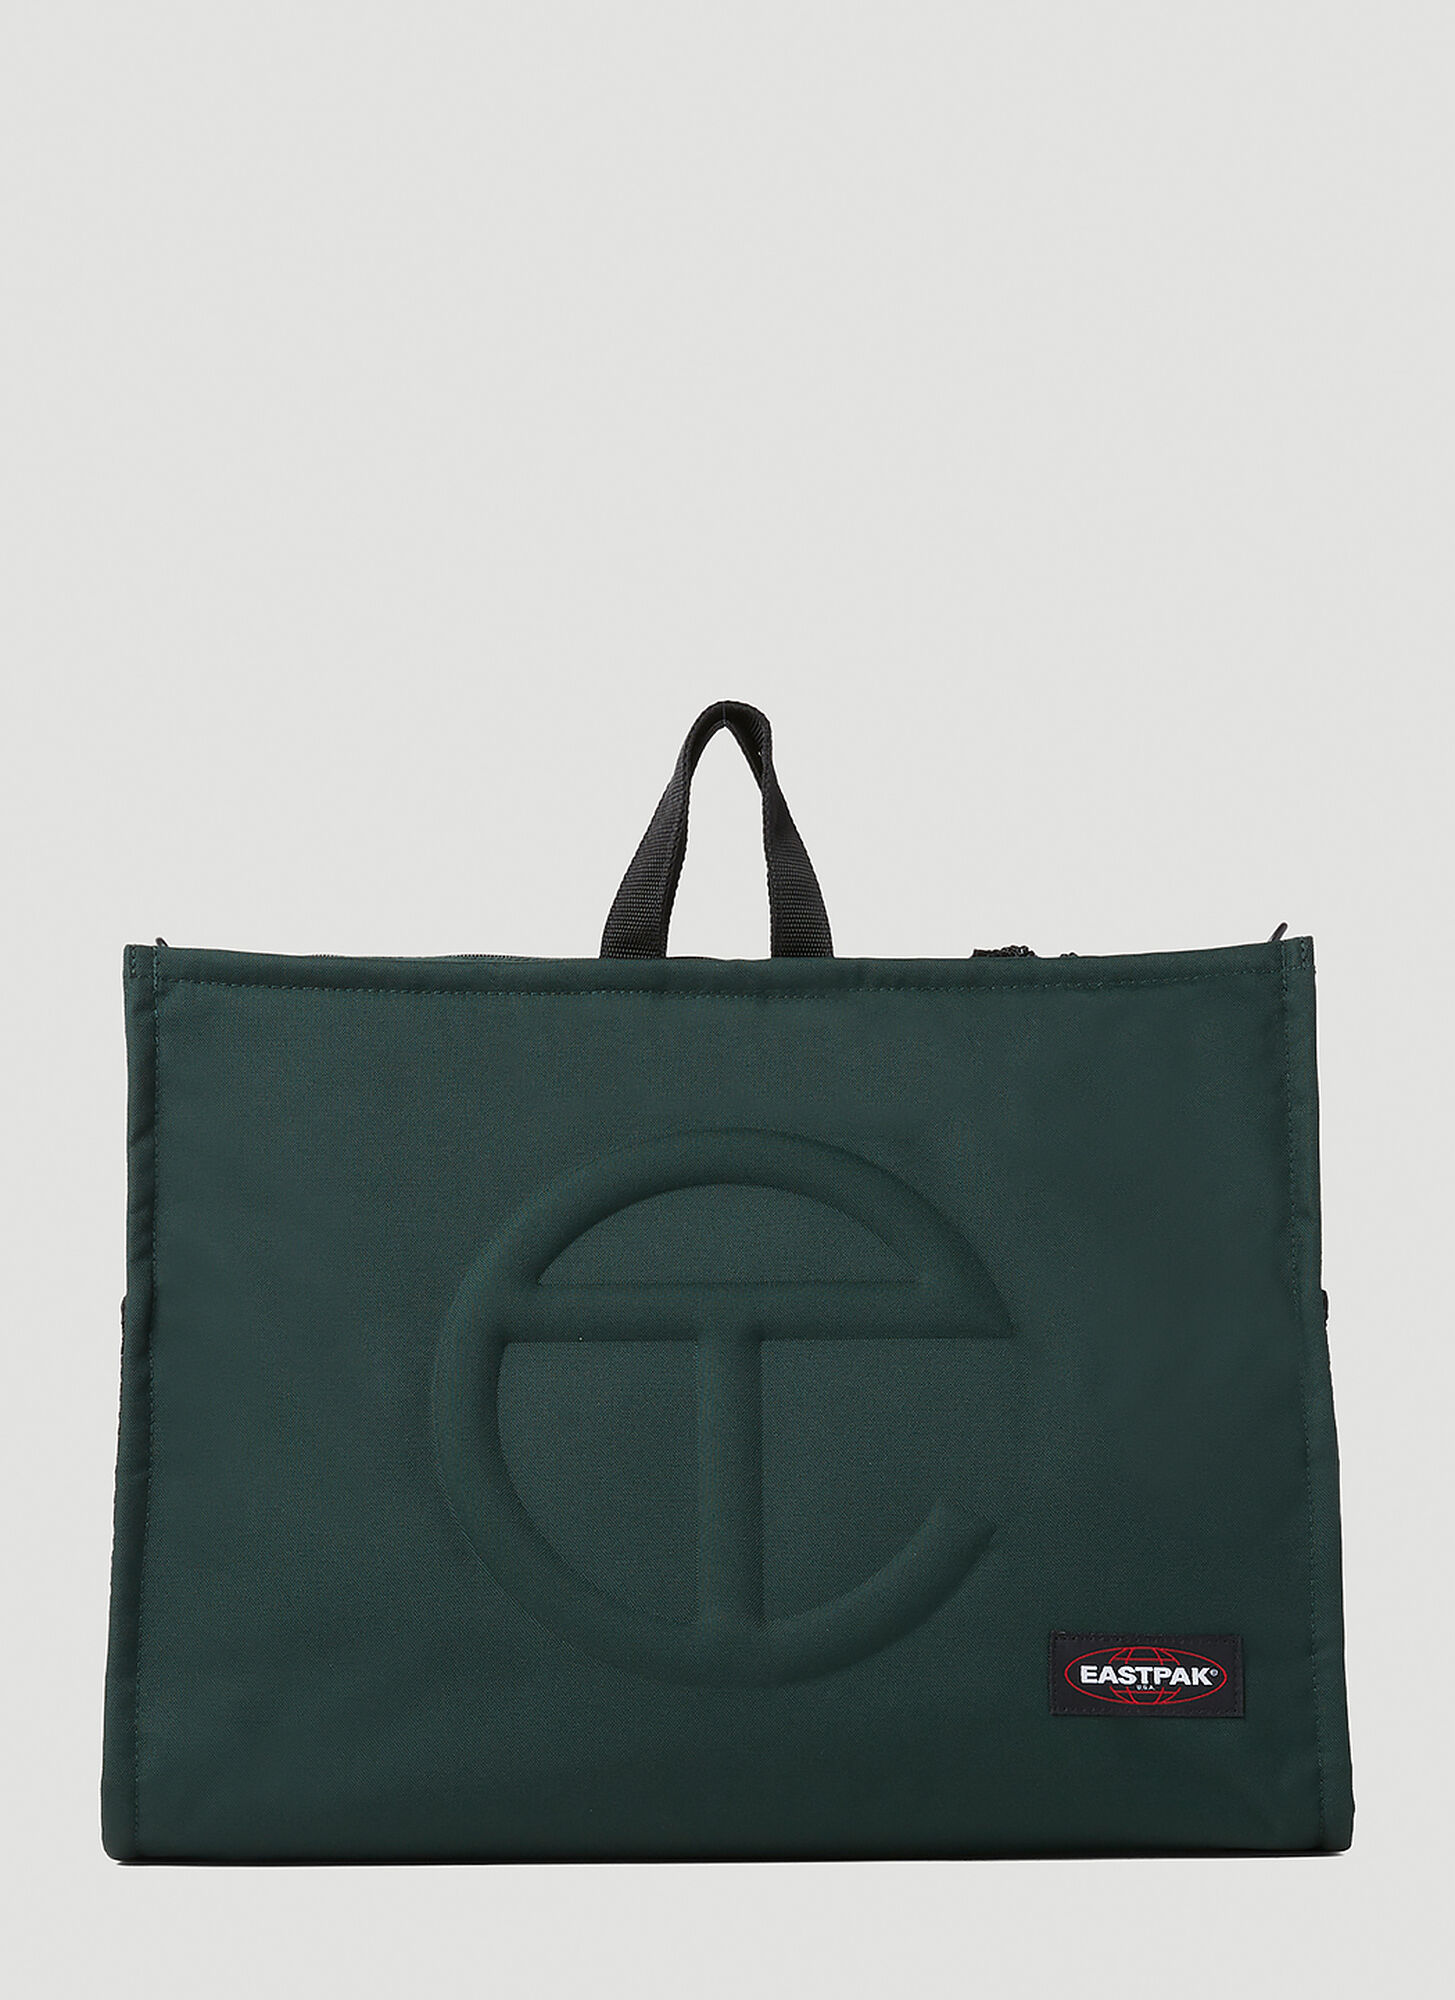 Eastpak X Telfar Shopper Large Tote Bag In Green